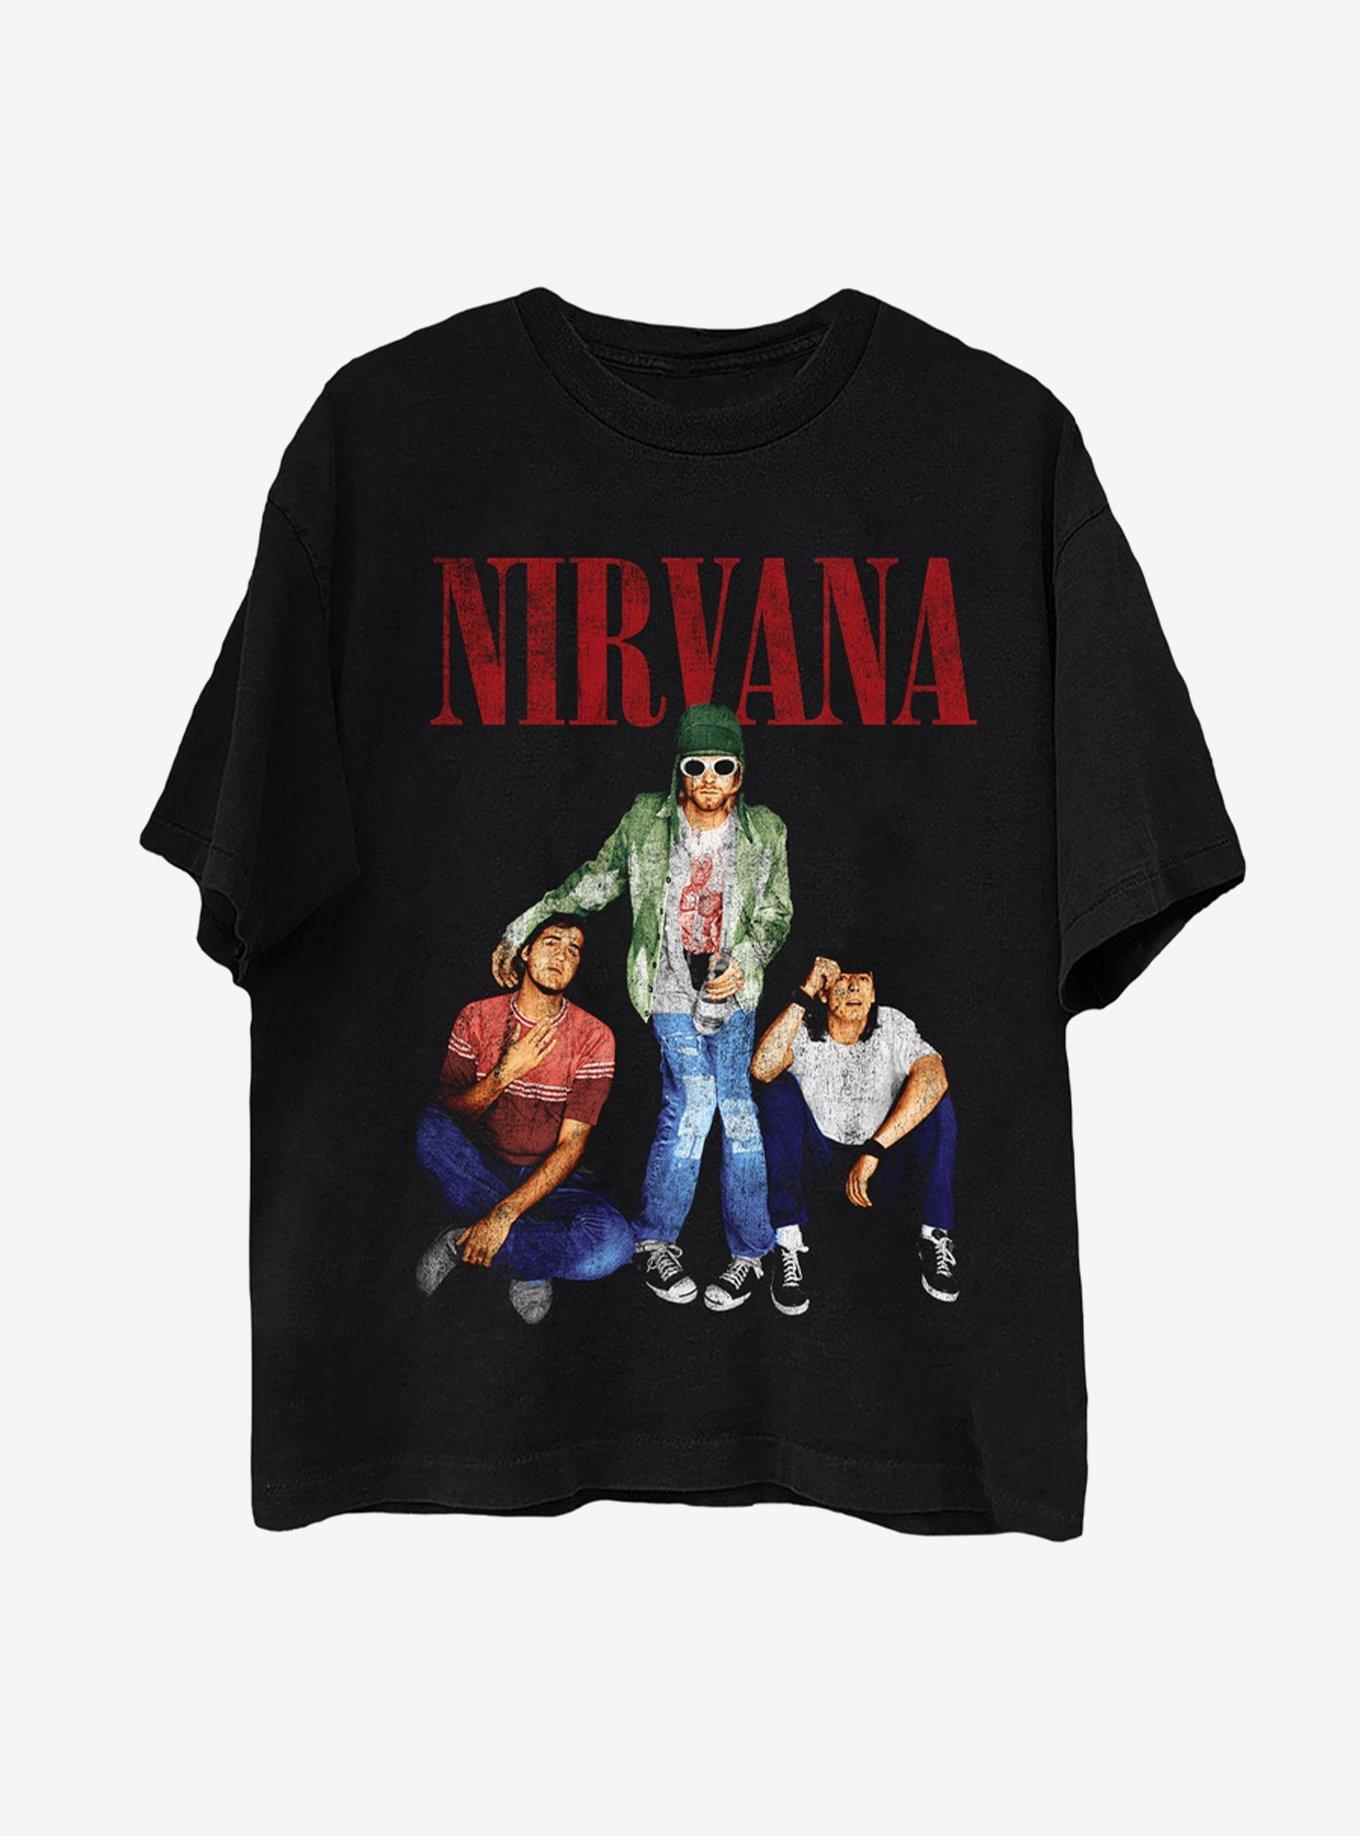 Nirvana Kurt Standing T-Shirt, BLACK, hi-res